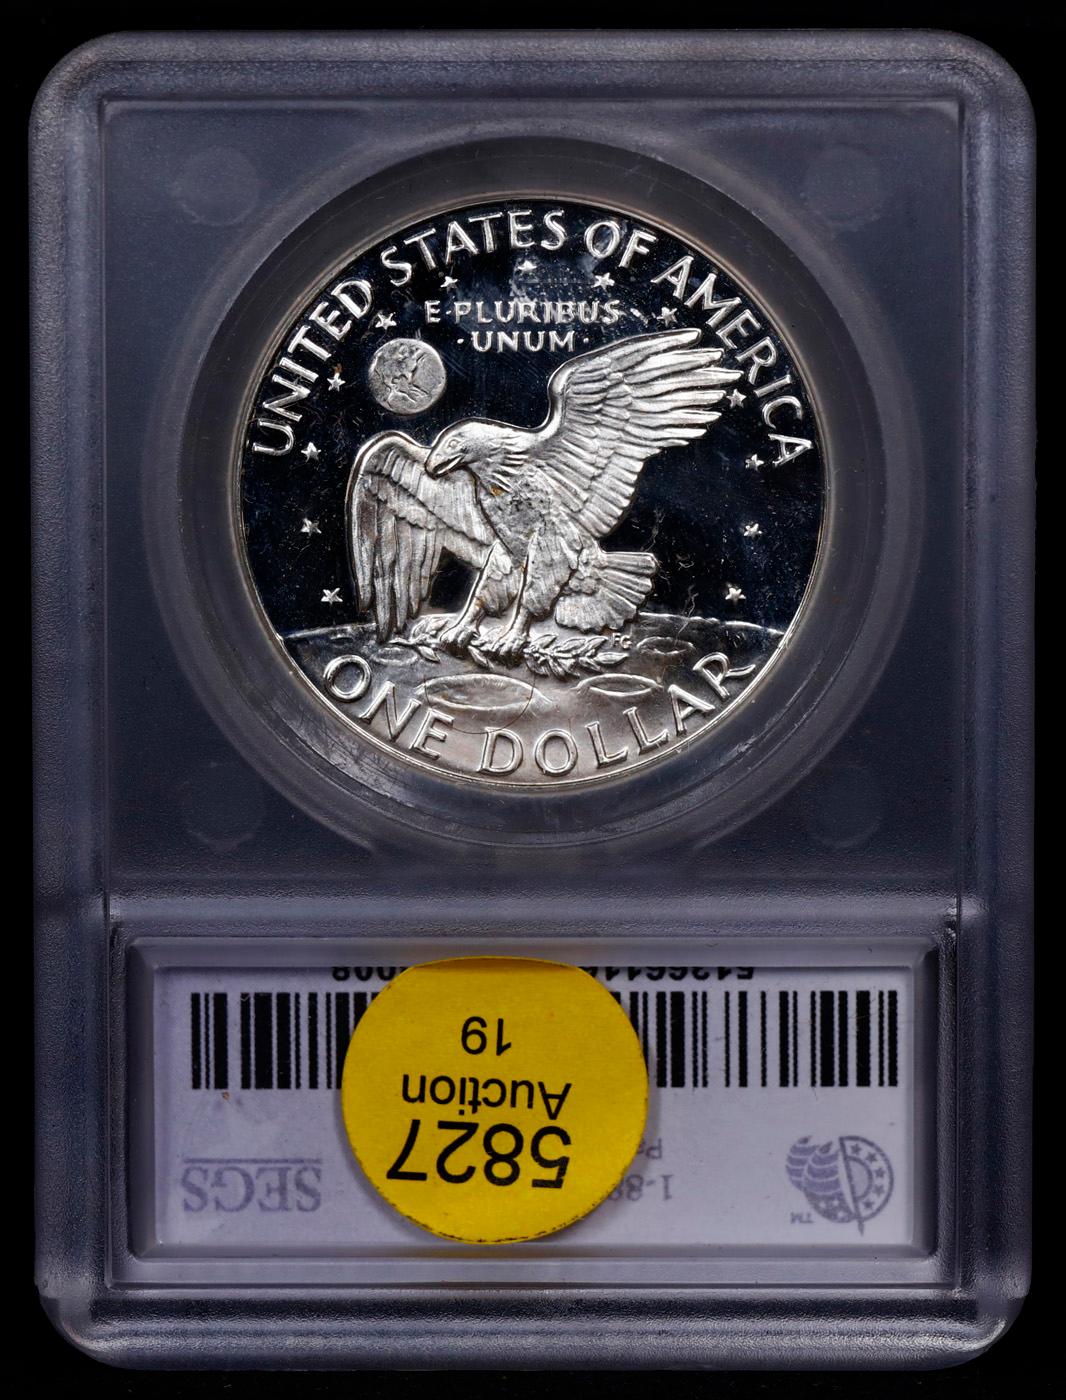 Proof 1972-s Silver Eisenhower Dollar $1 Graded pr70 dcam By SEGS